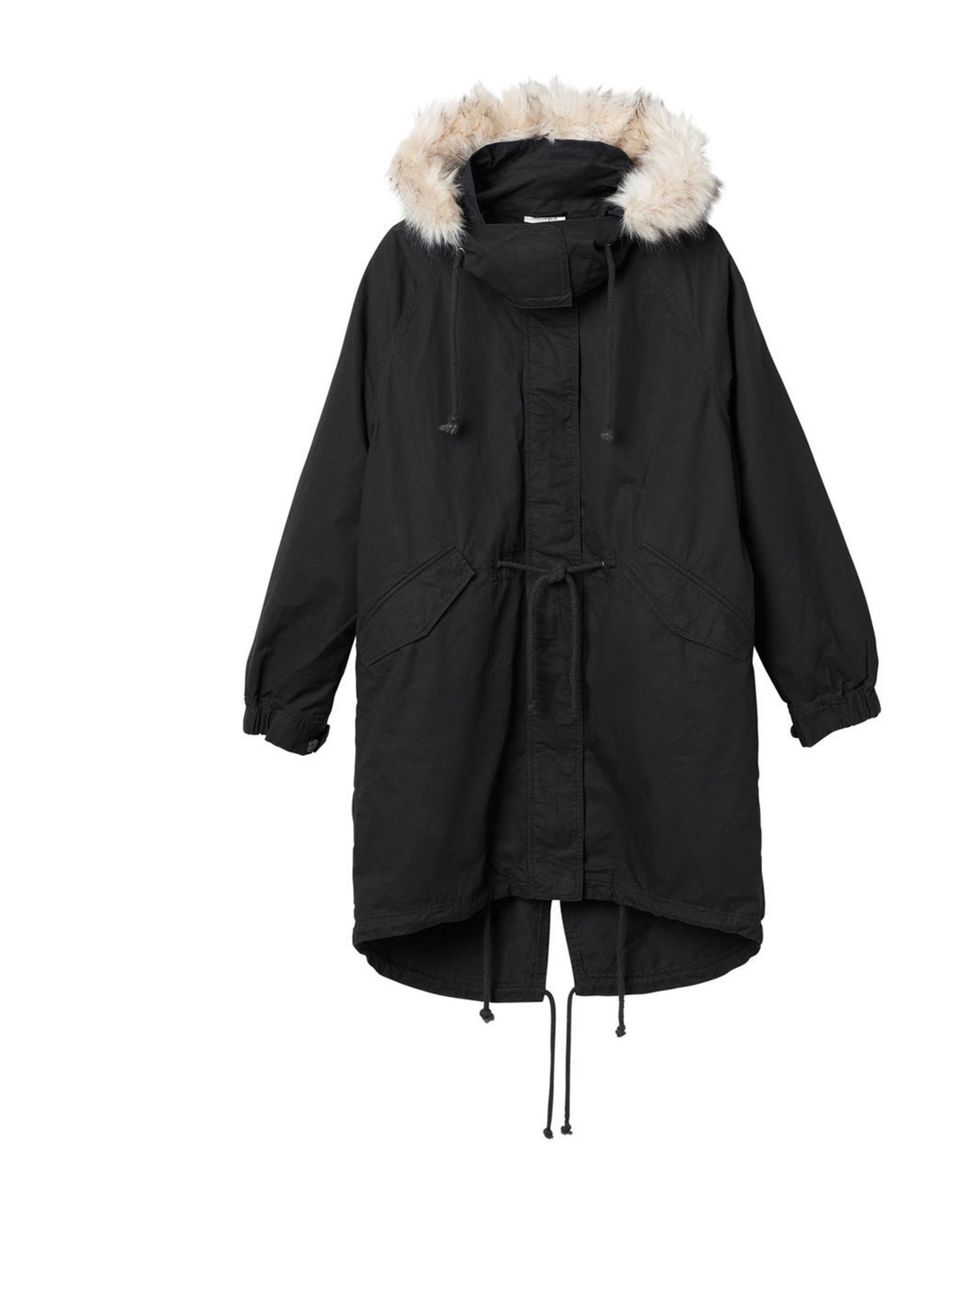 <p>Monki Black Parka  £70. Available at <a href="http://www.monki.com/Shop/Outerwear/Carlotta_jacket/65005-2098054.1">Monki.com</a></p>